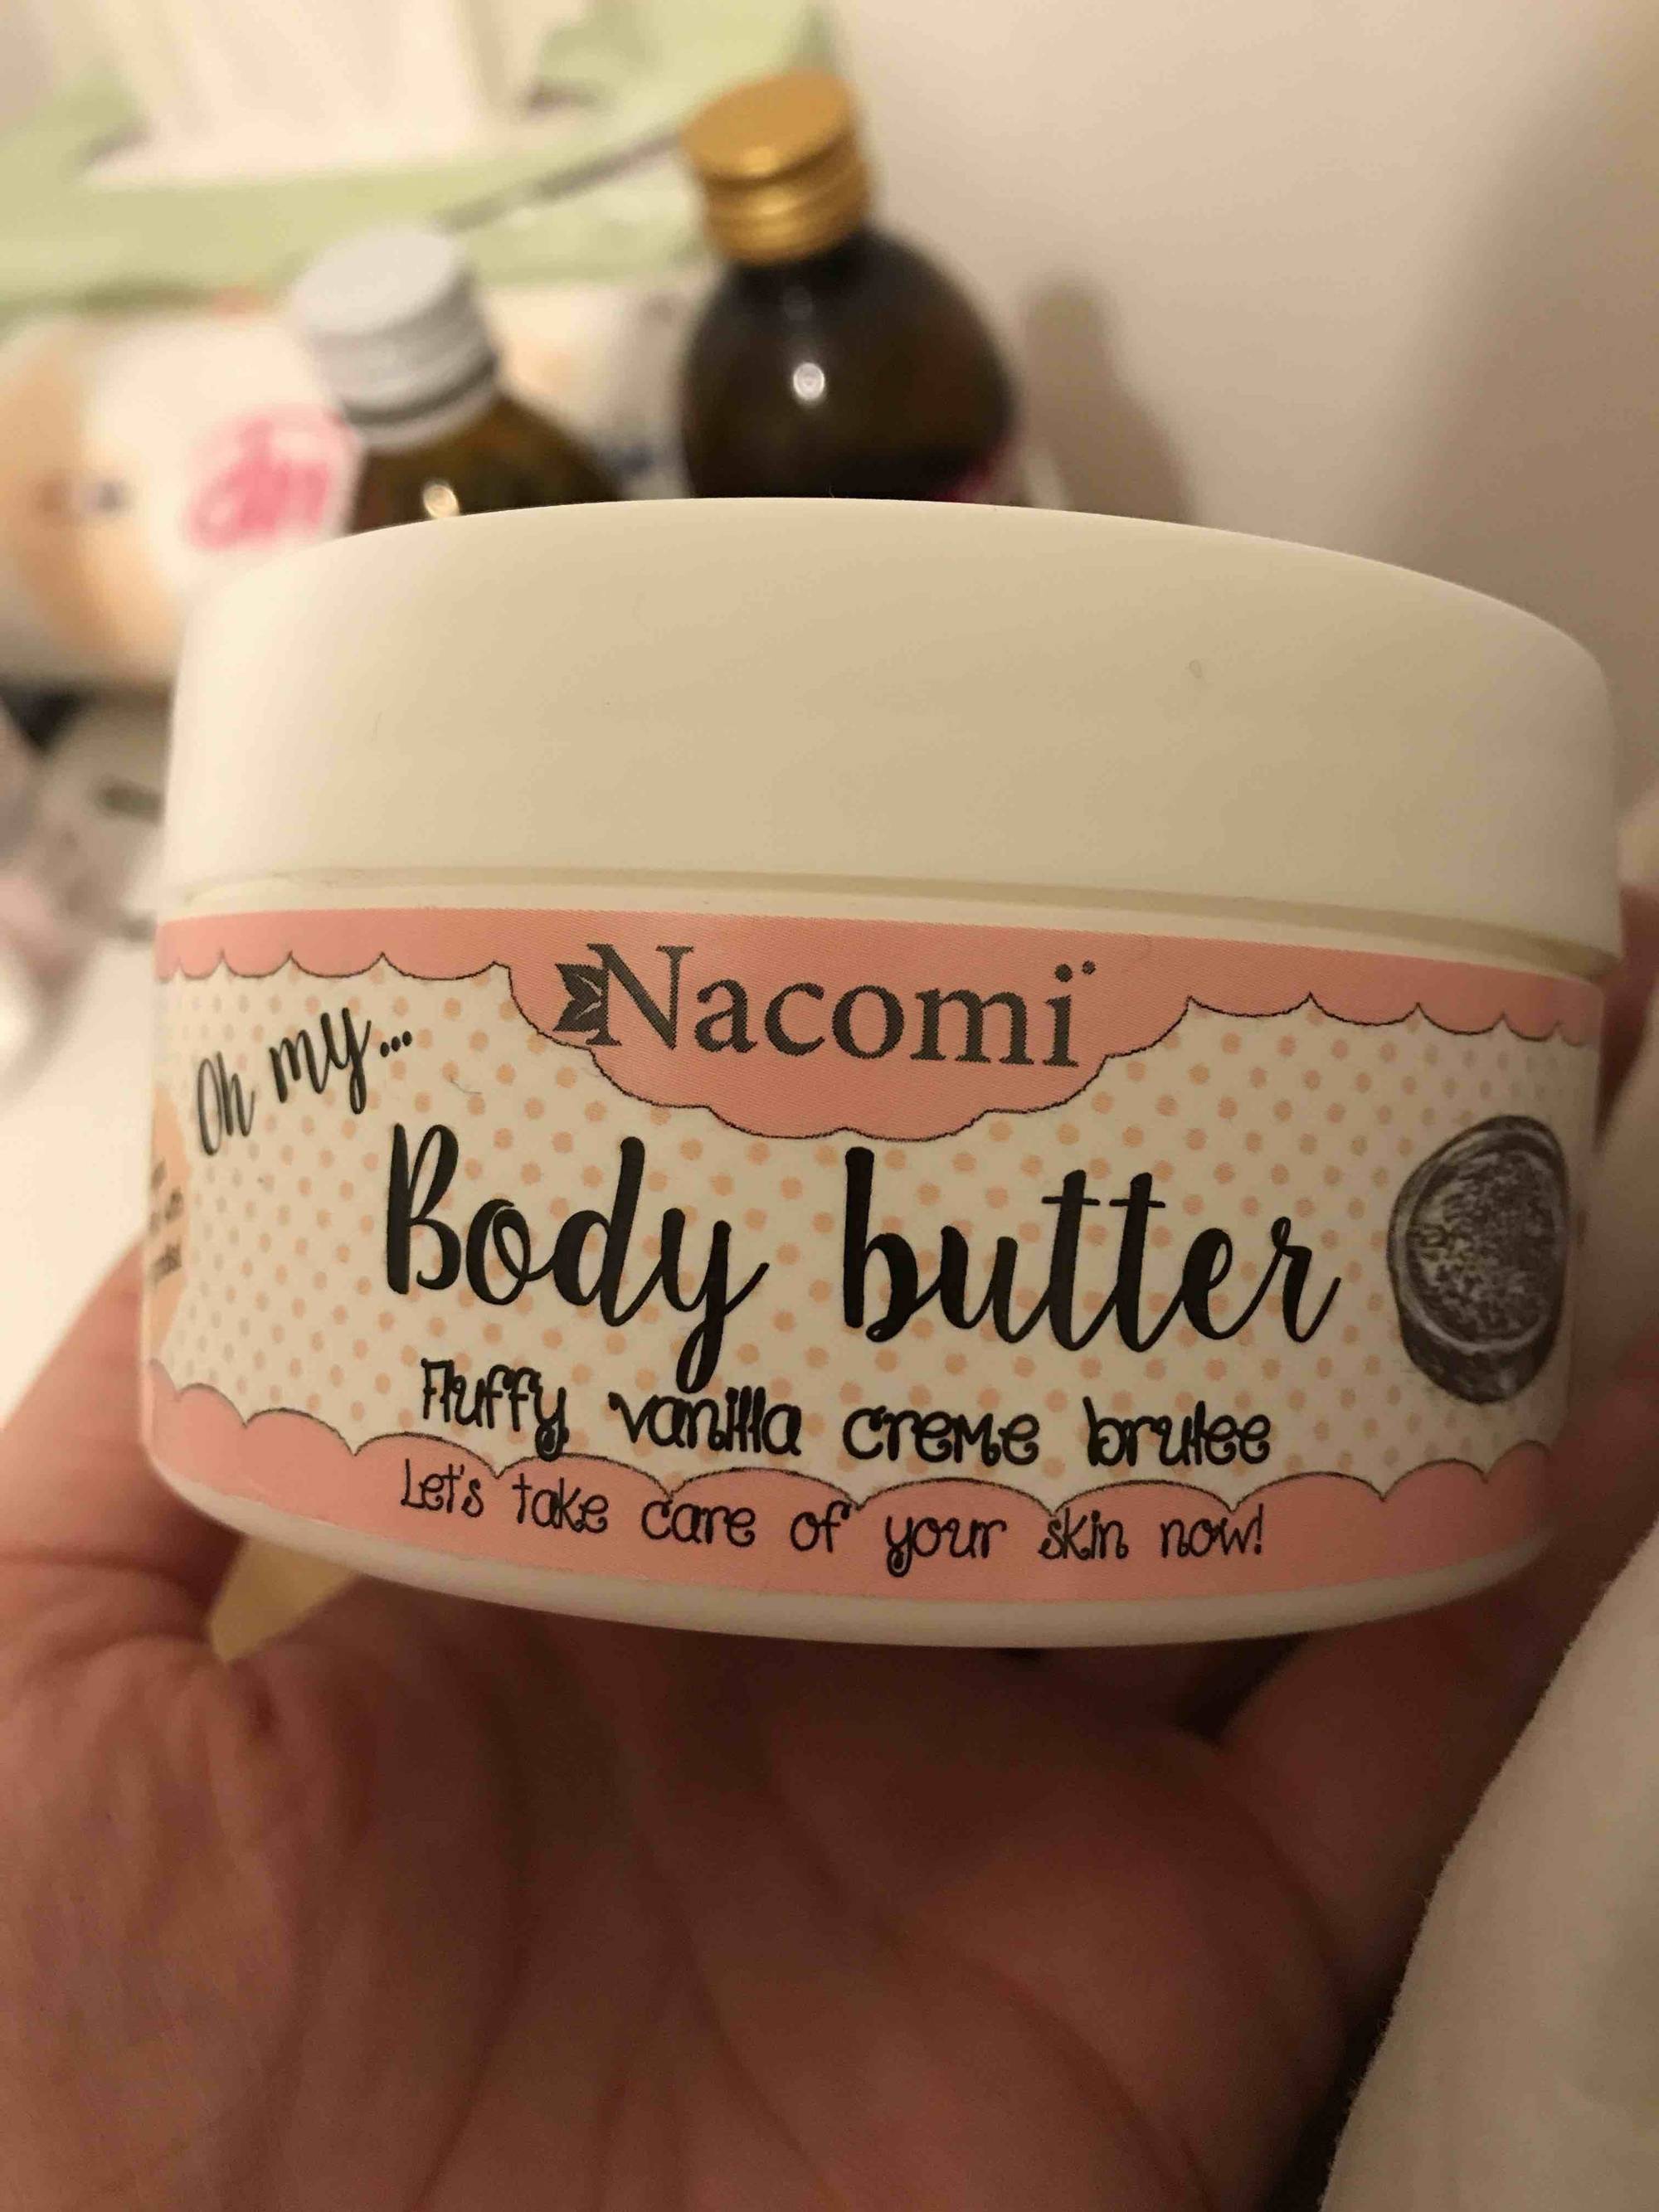 NACOMI - Body butter - Fluffy vanilla creme brulee